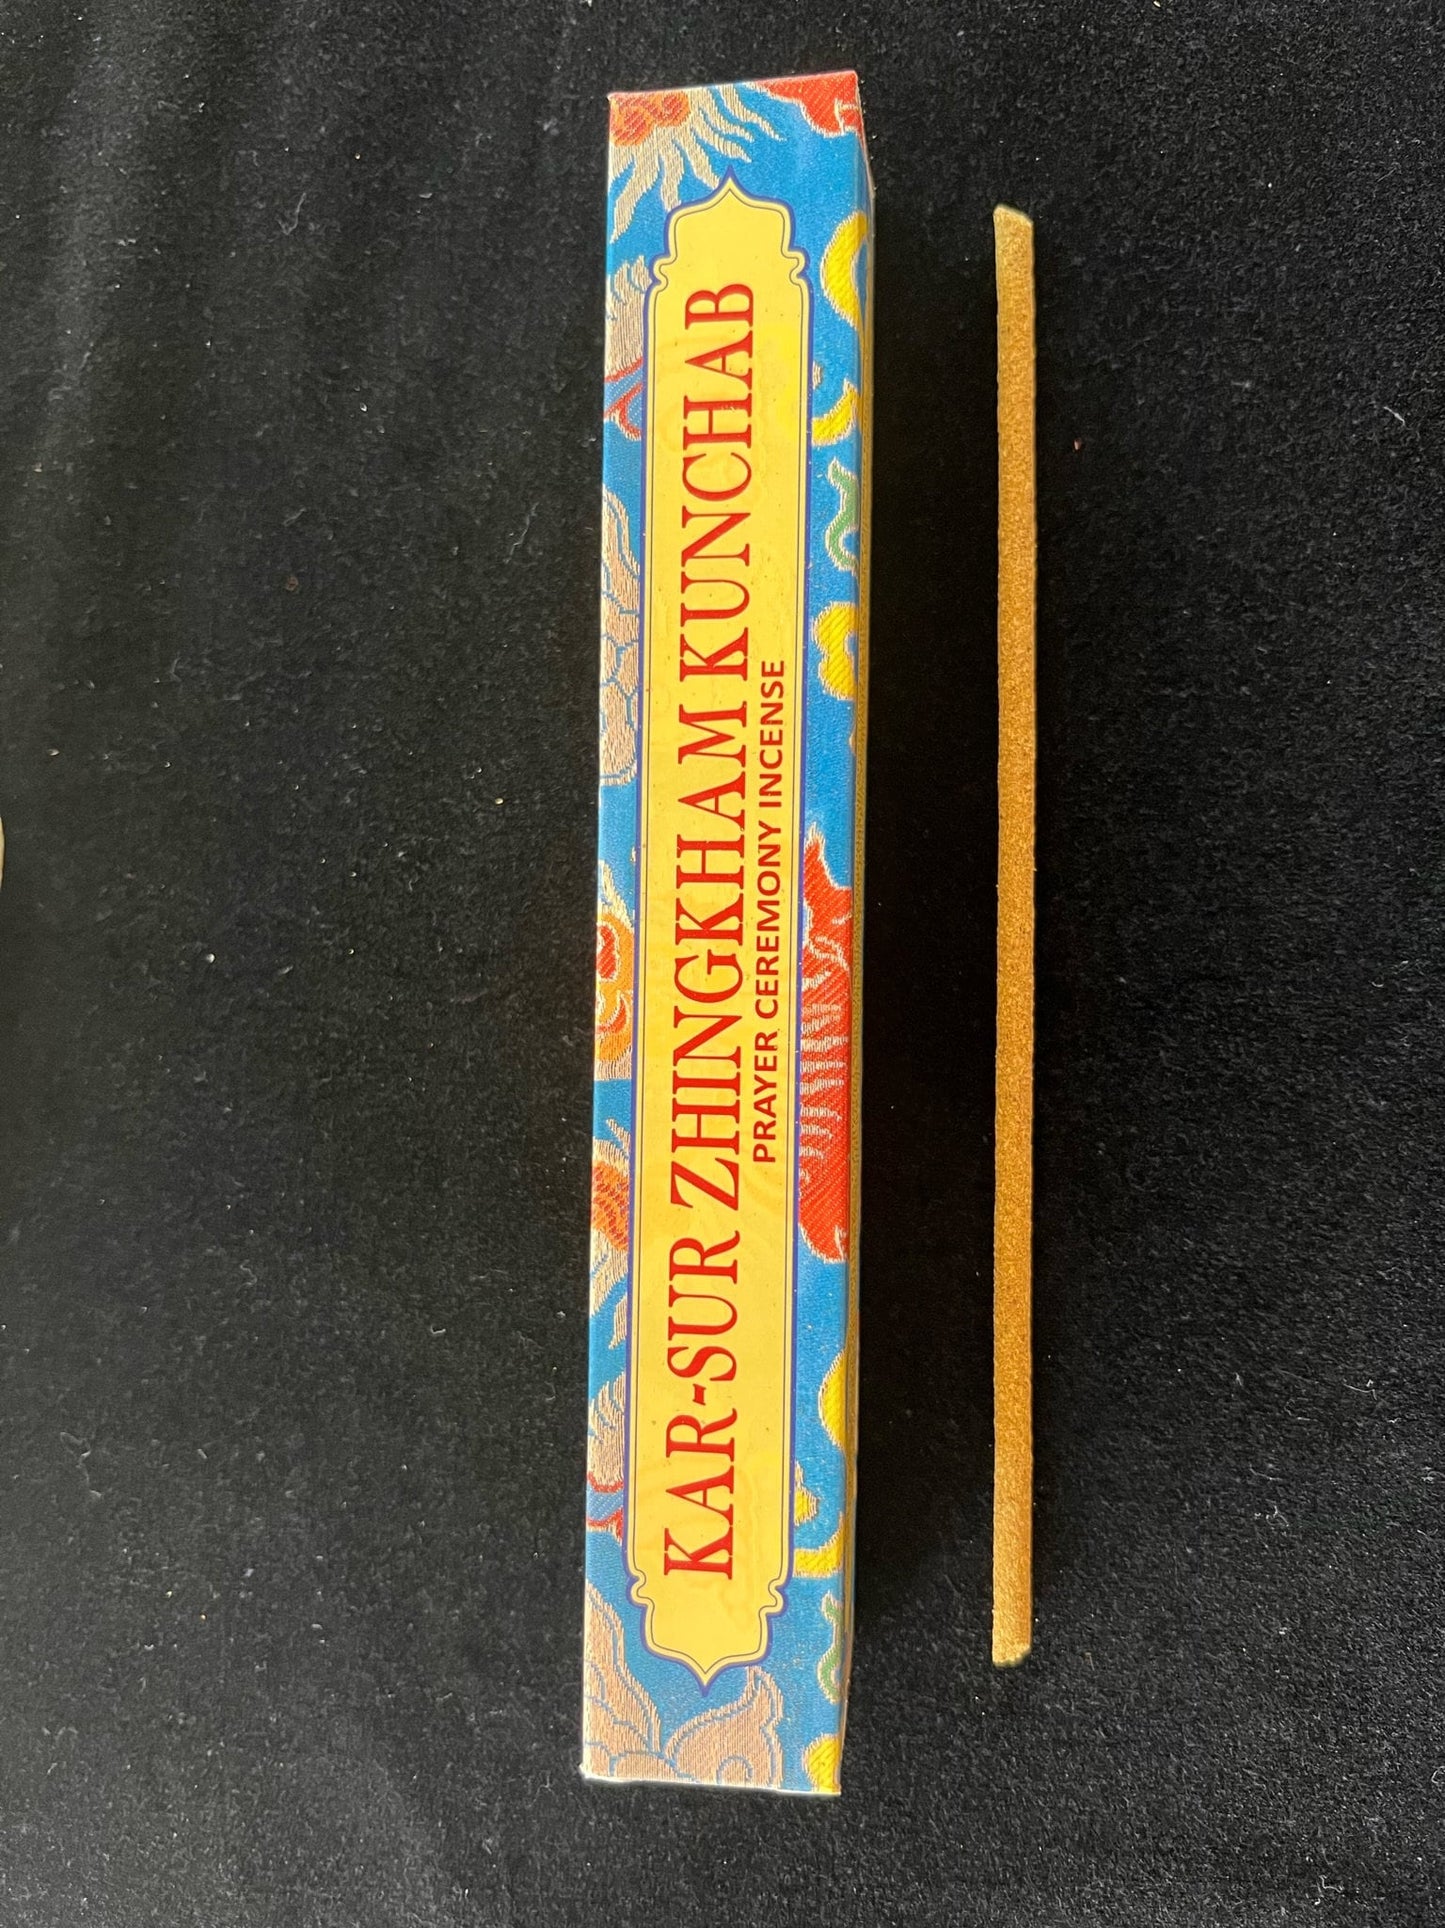 Kar-Sur Zhingkham Kunchab Prayer Ceremony Incense | Dhendup Pleasure Incense Incense  | Tibetan Incense | 30 sticks | 8 inch sticks